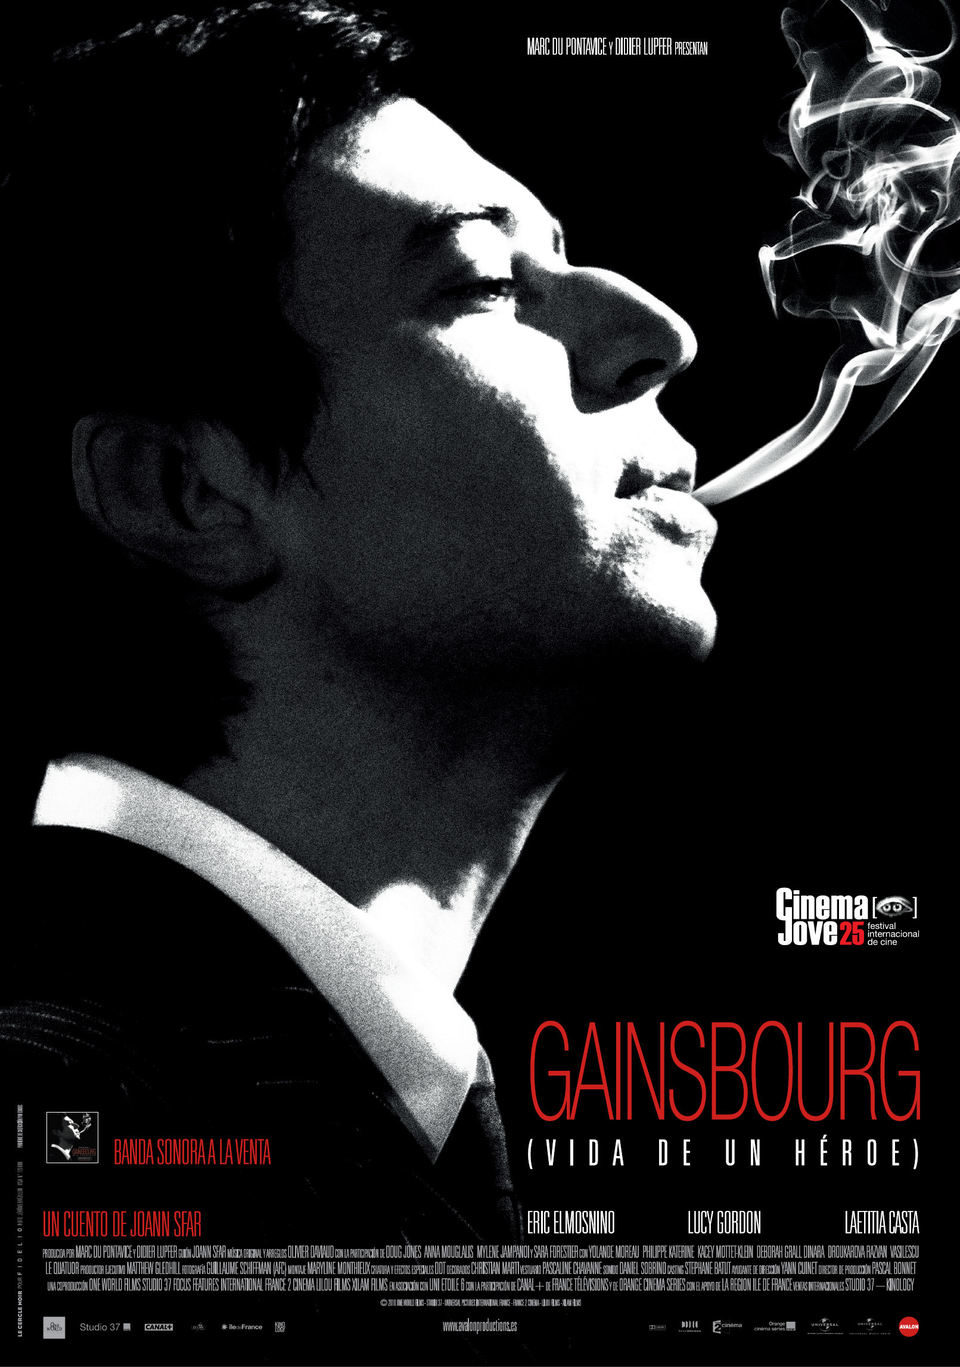 Cartel de Gainsbourg (Vida de un héroe) - España